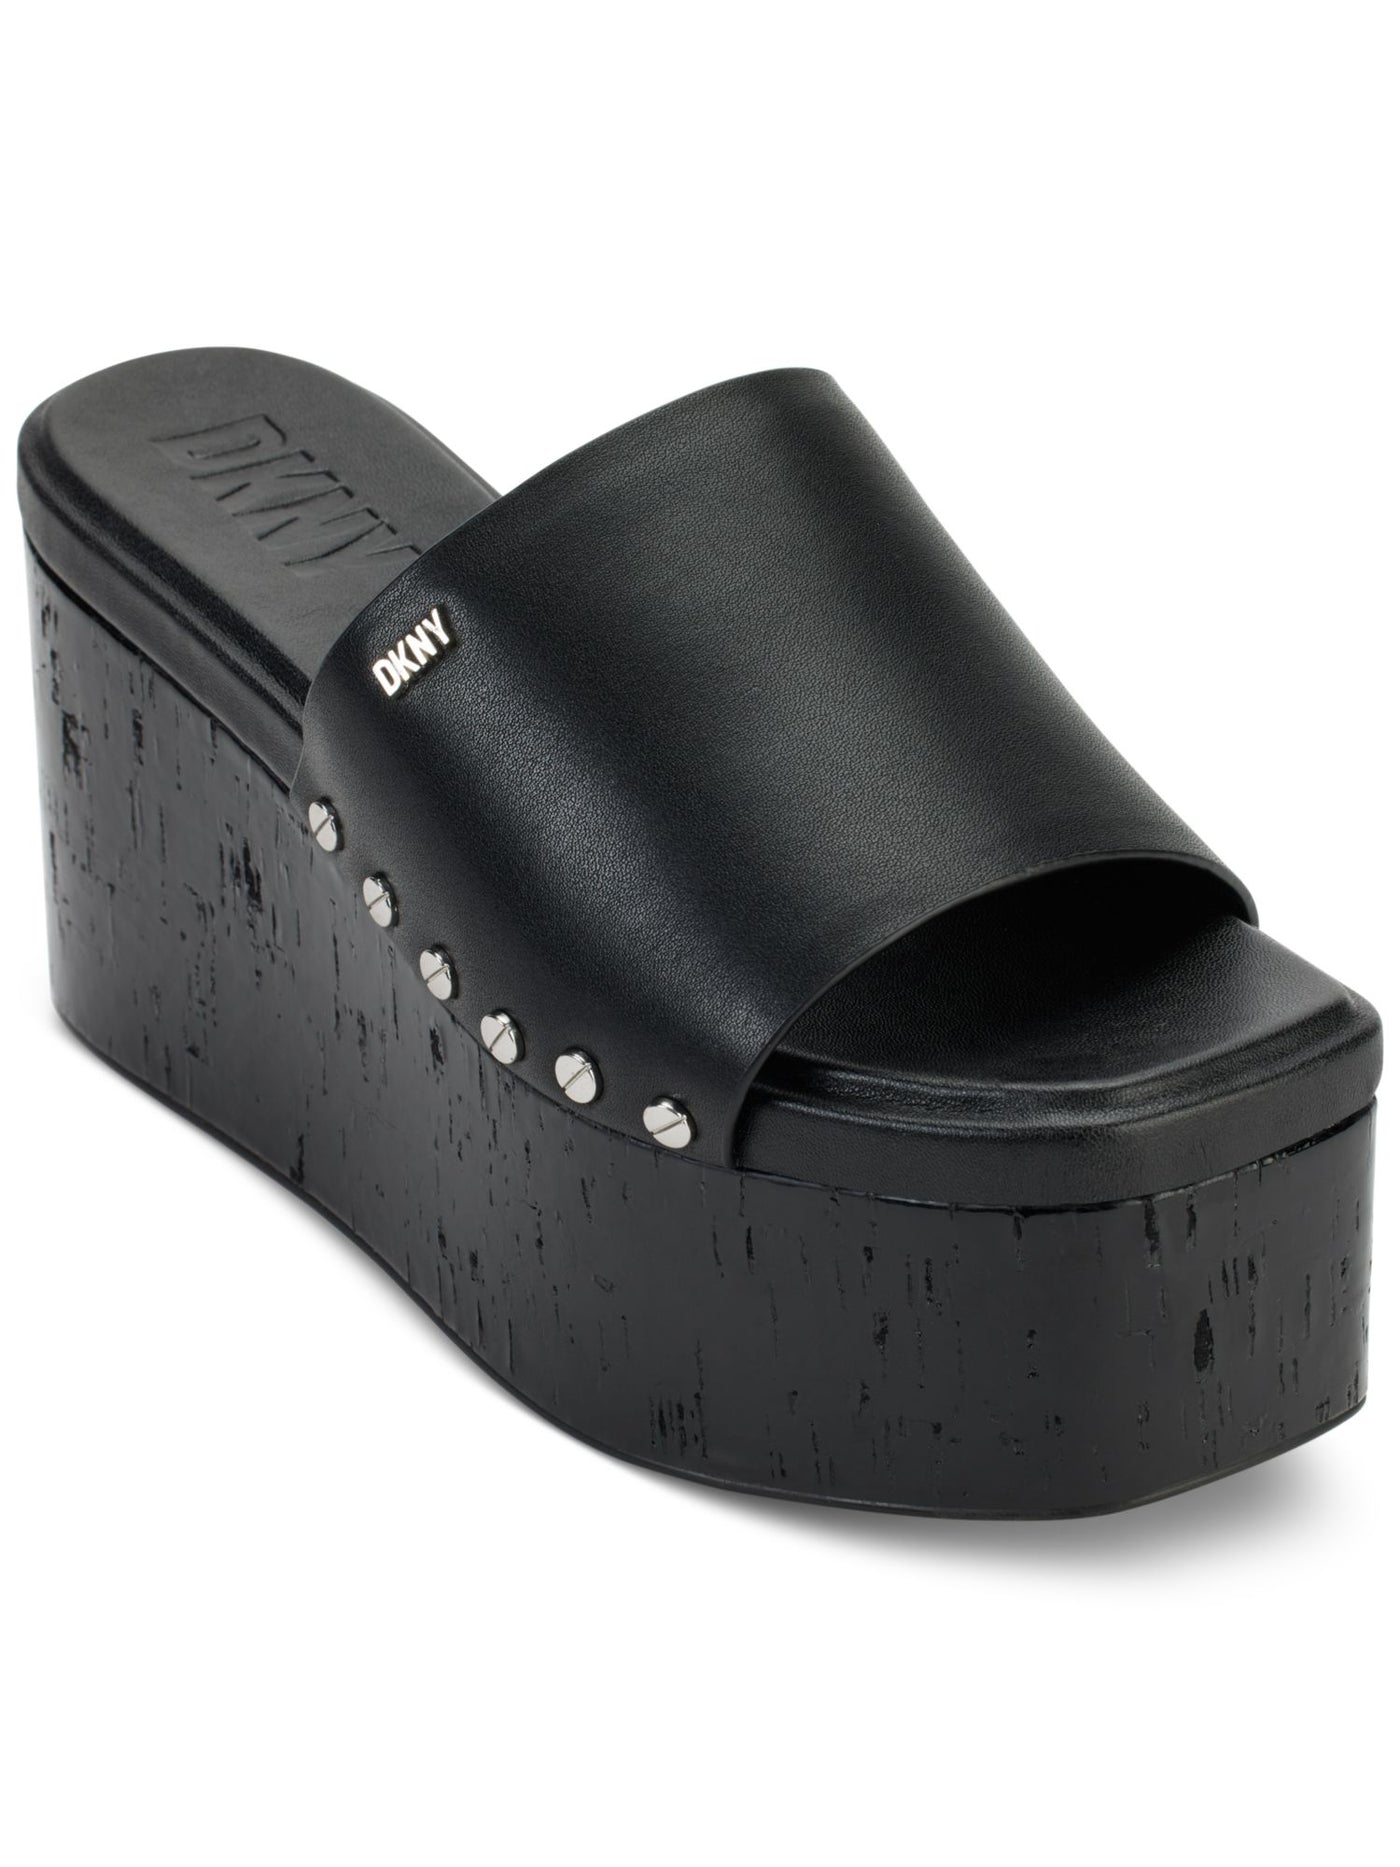 DKNY Womens Black Padded Goring Studded Alvy Almond Toe Platform Slip On Leather Slide Sandals Shoes 11 M